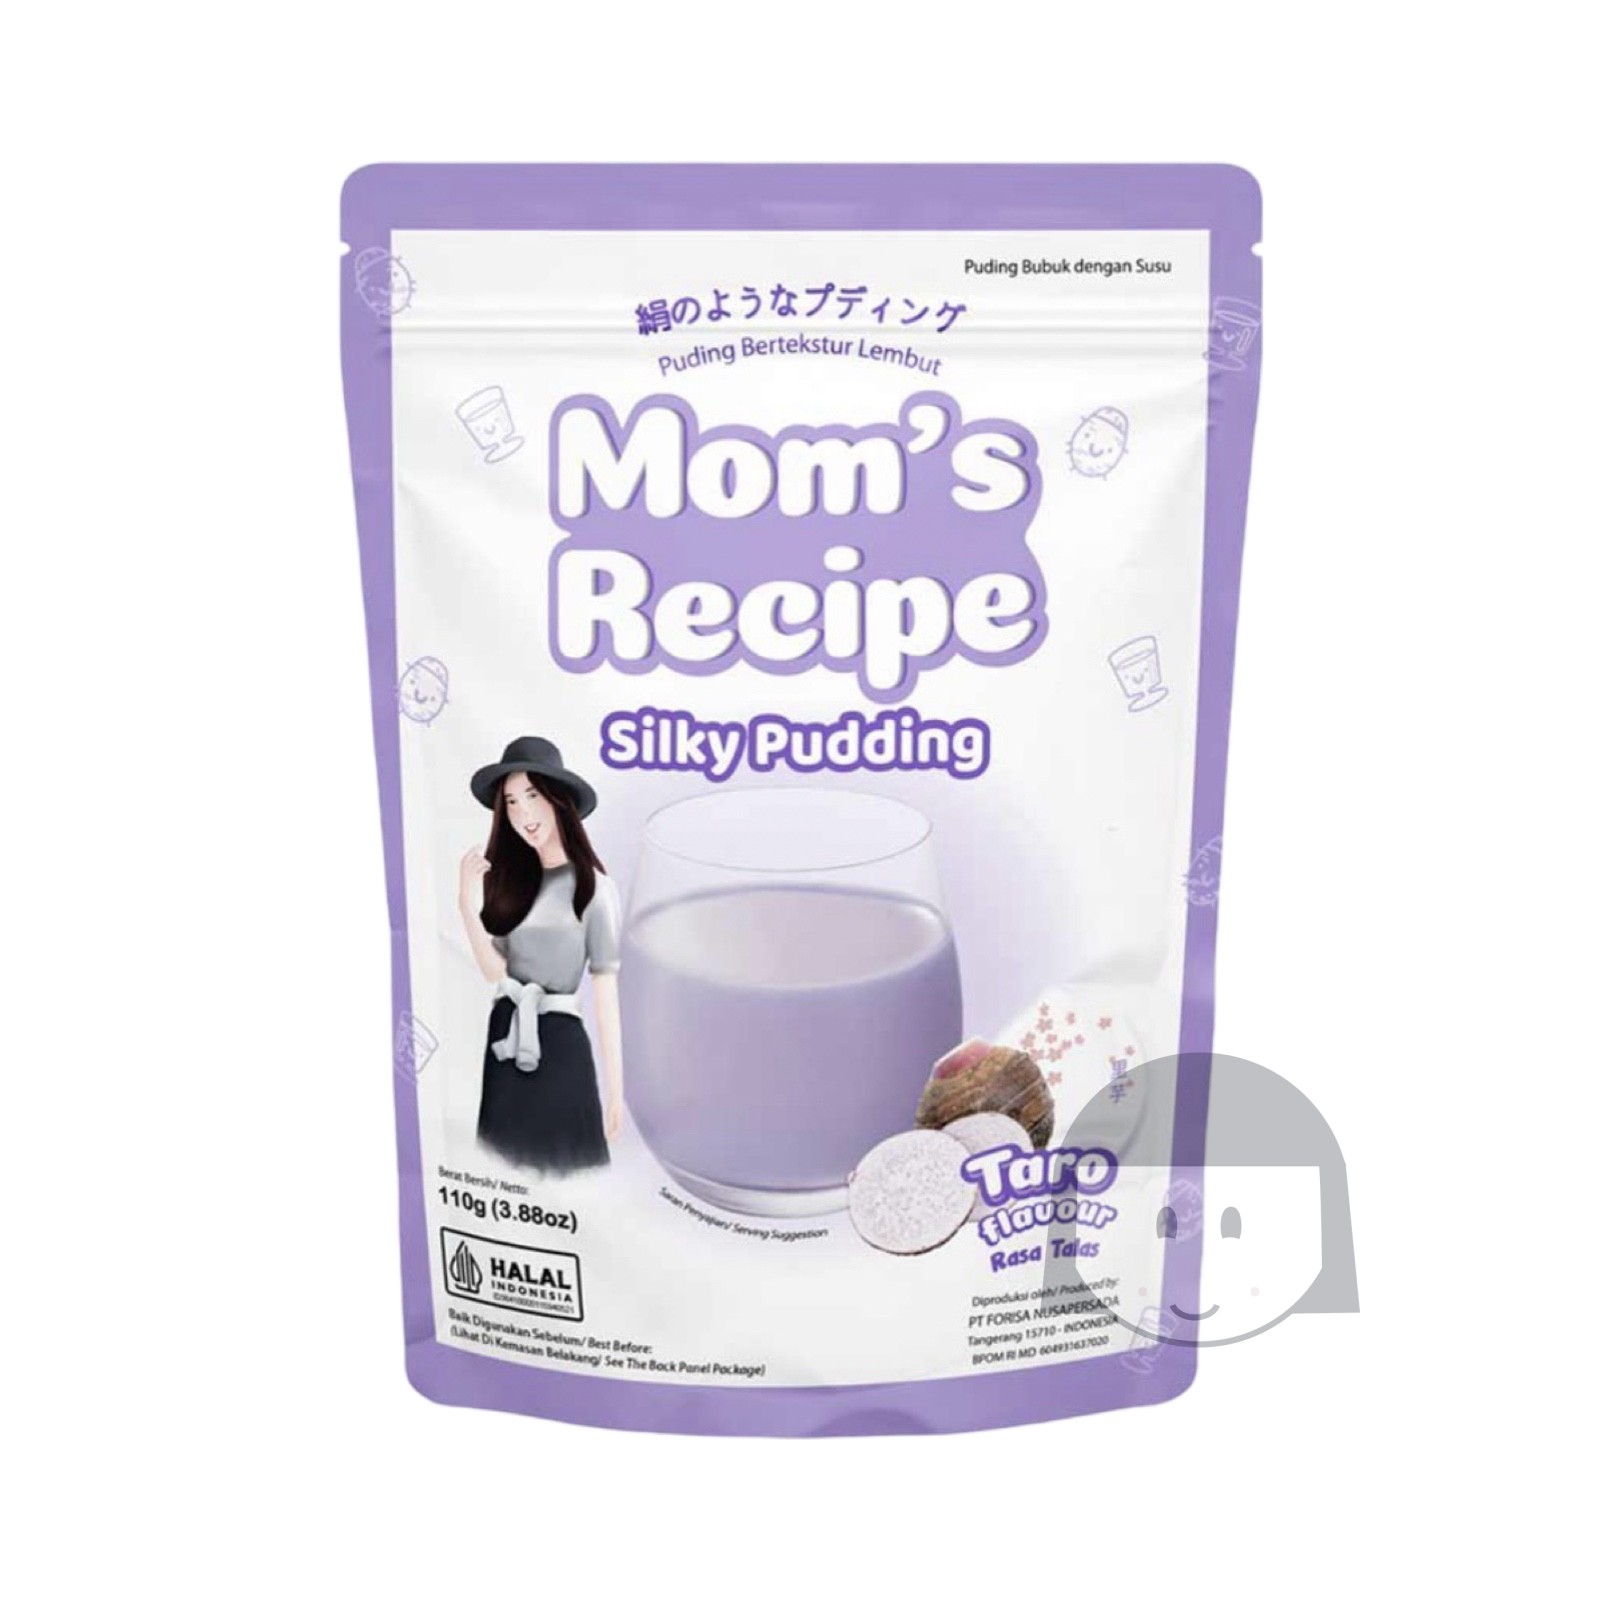 Mom’s Recipe Silky Pudding Rasa Talas 110 gr Baking Supplies